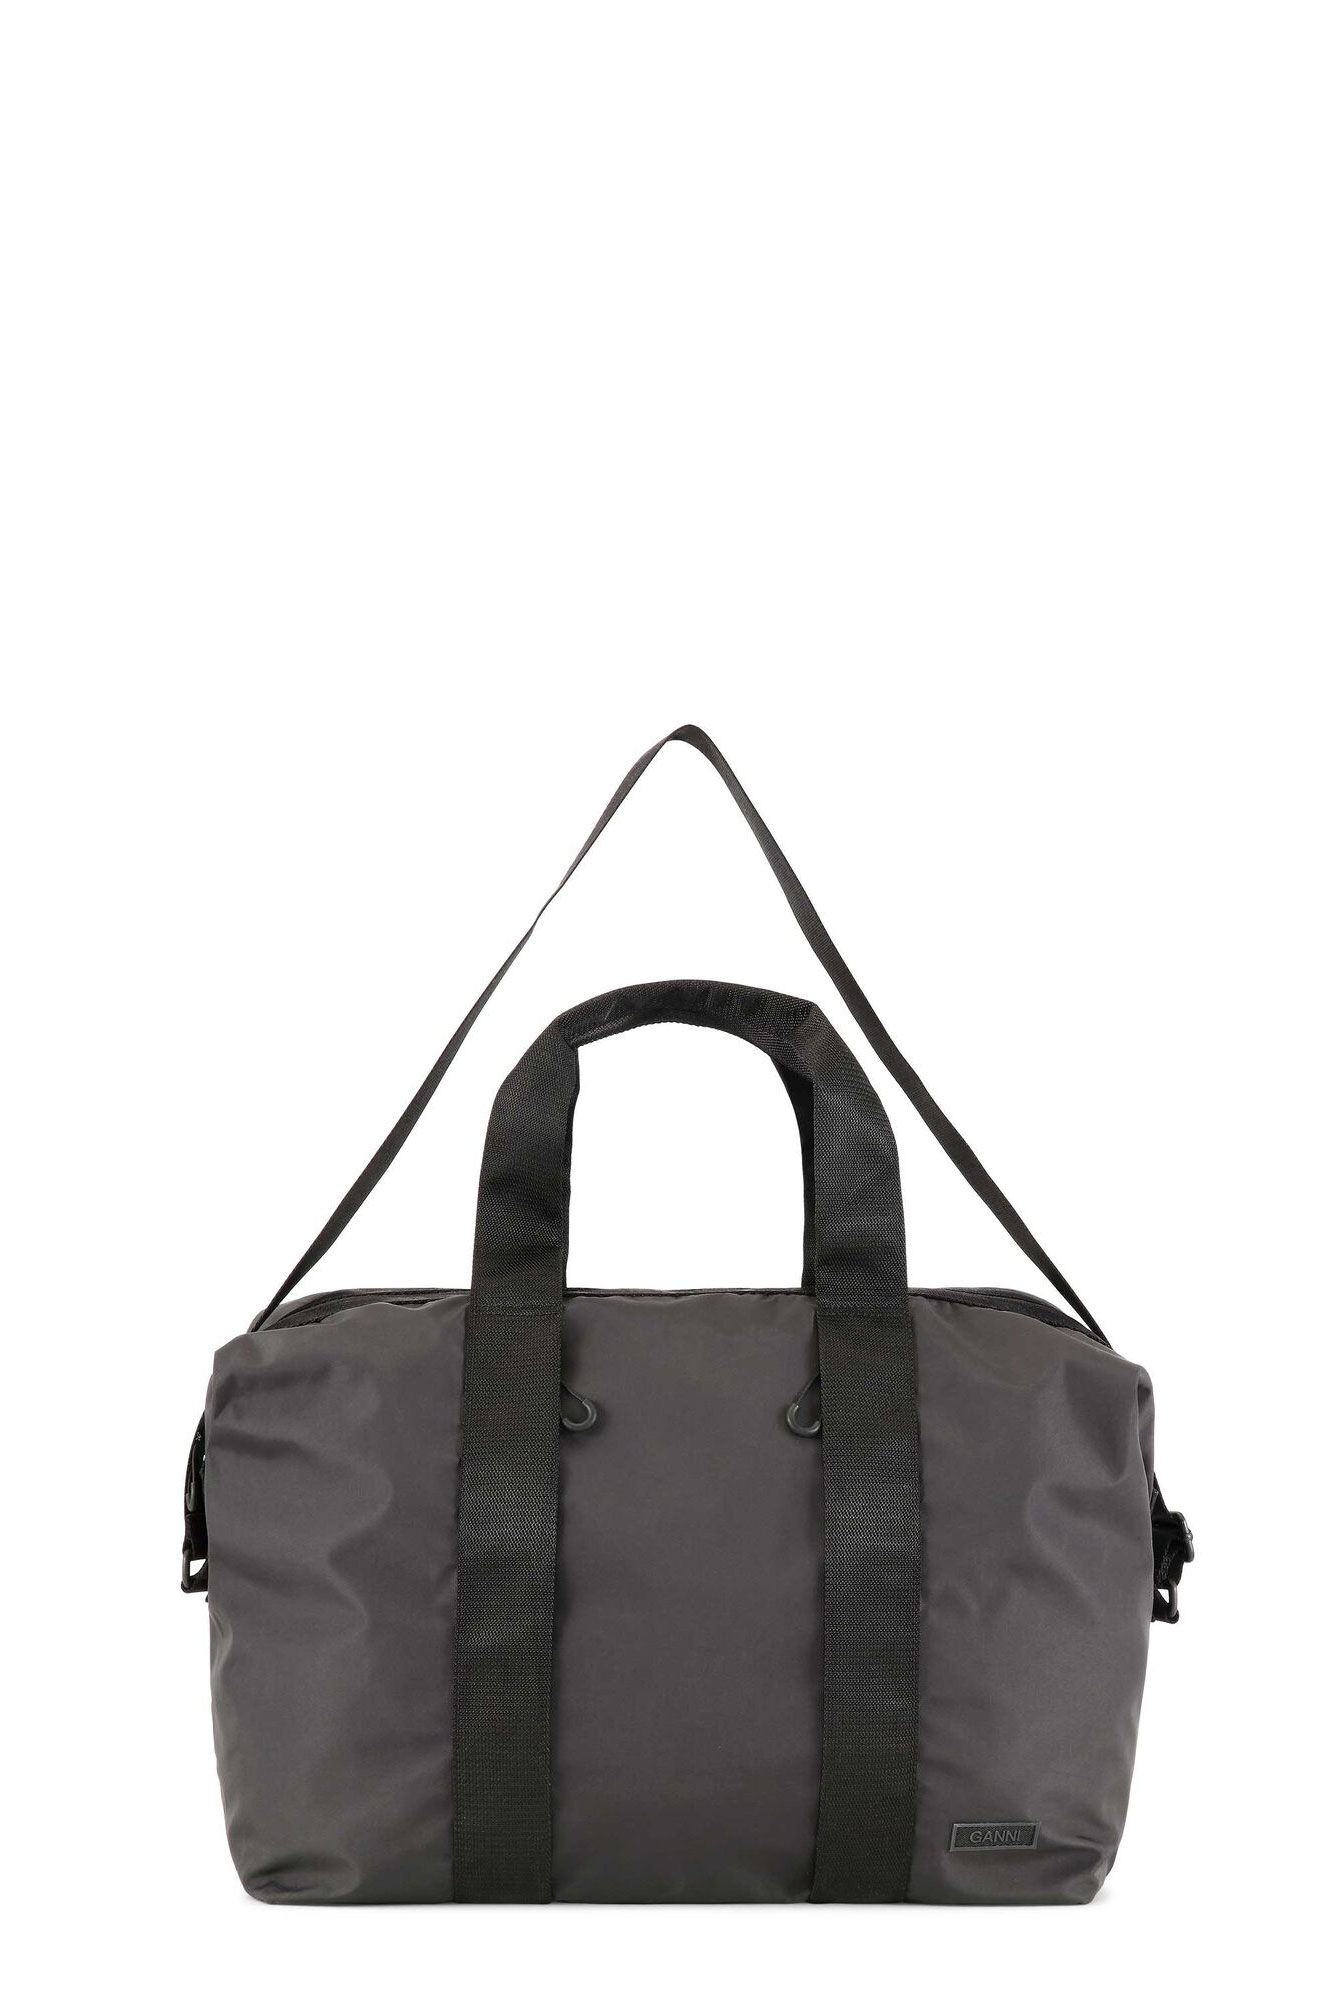 27527/T Ladybug Duffel Bag with Handle & Wheels Tassen & portemonnees Bagage & Reizen Duffelbags 